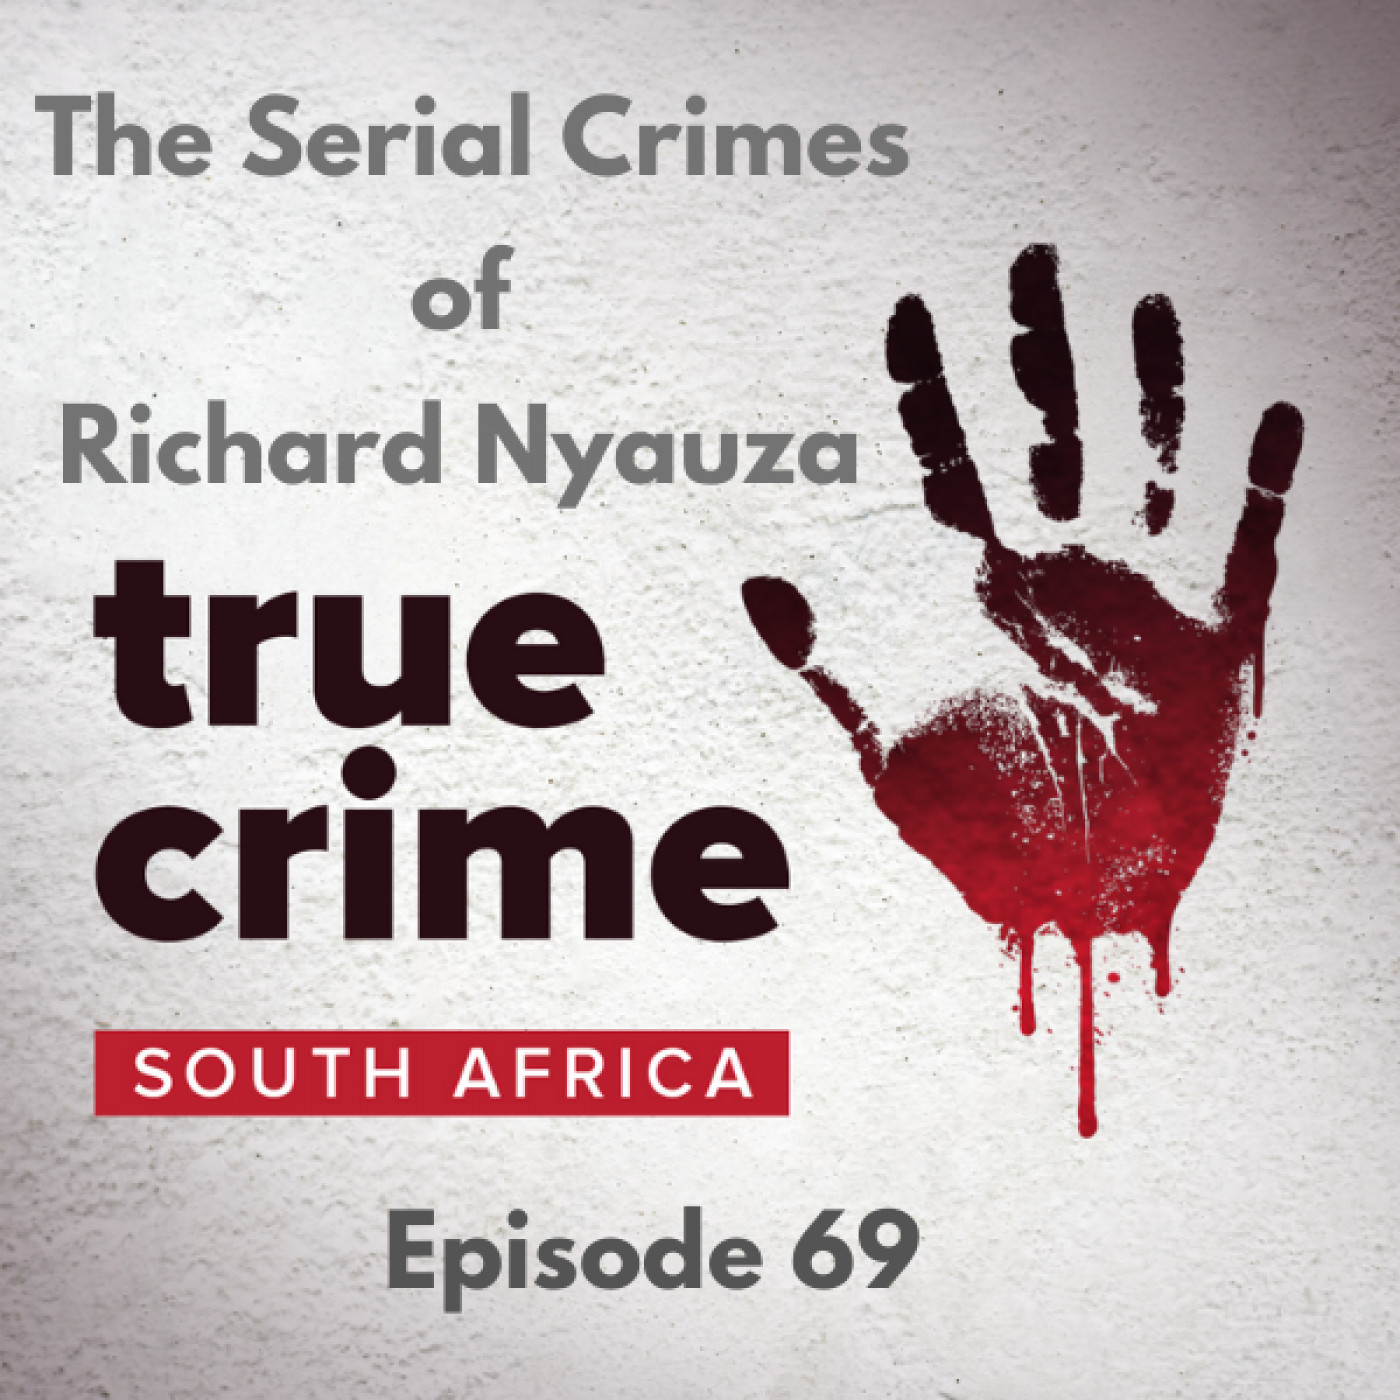 Episode 69 - The Serial Crimes of Richard Nyauza